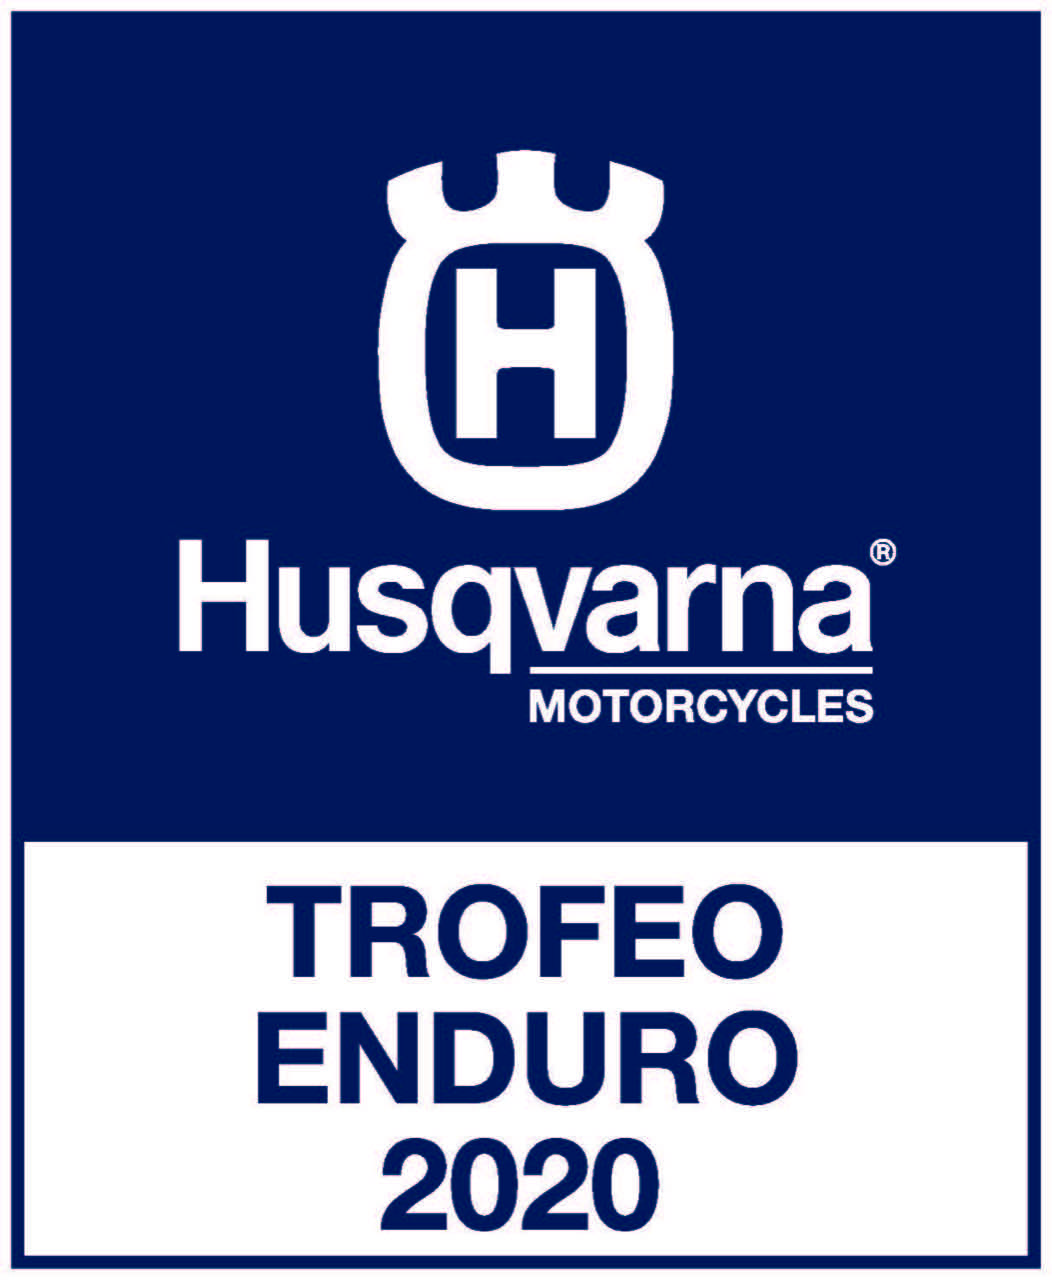 Trofeo Enduro Husqvarna 2020 - informazioni 